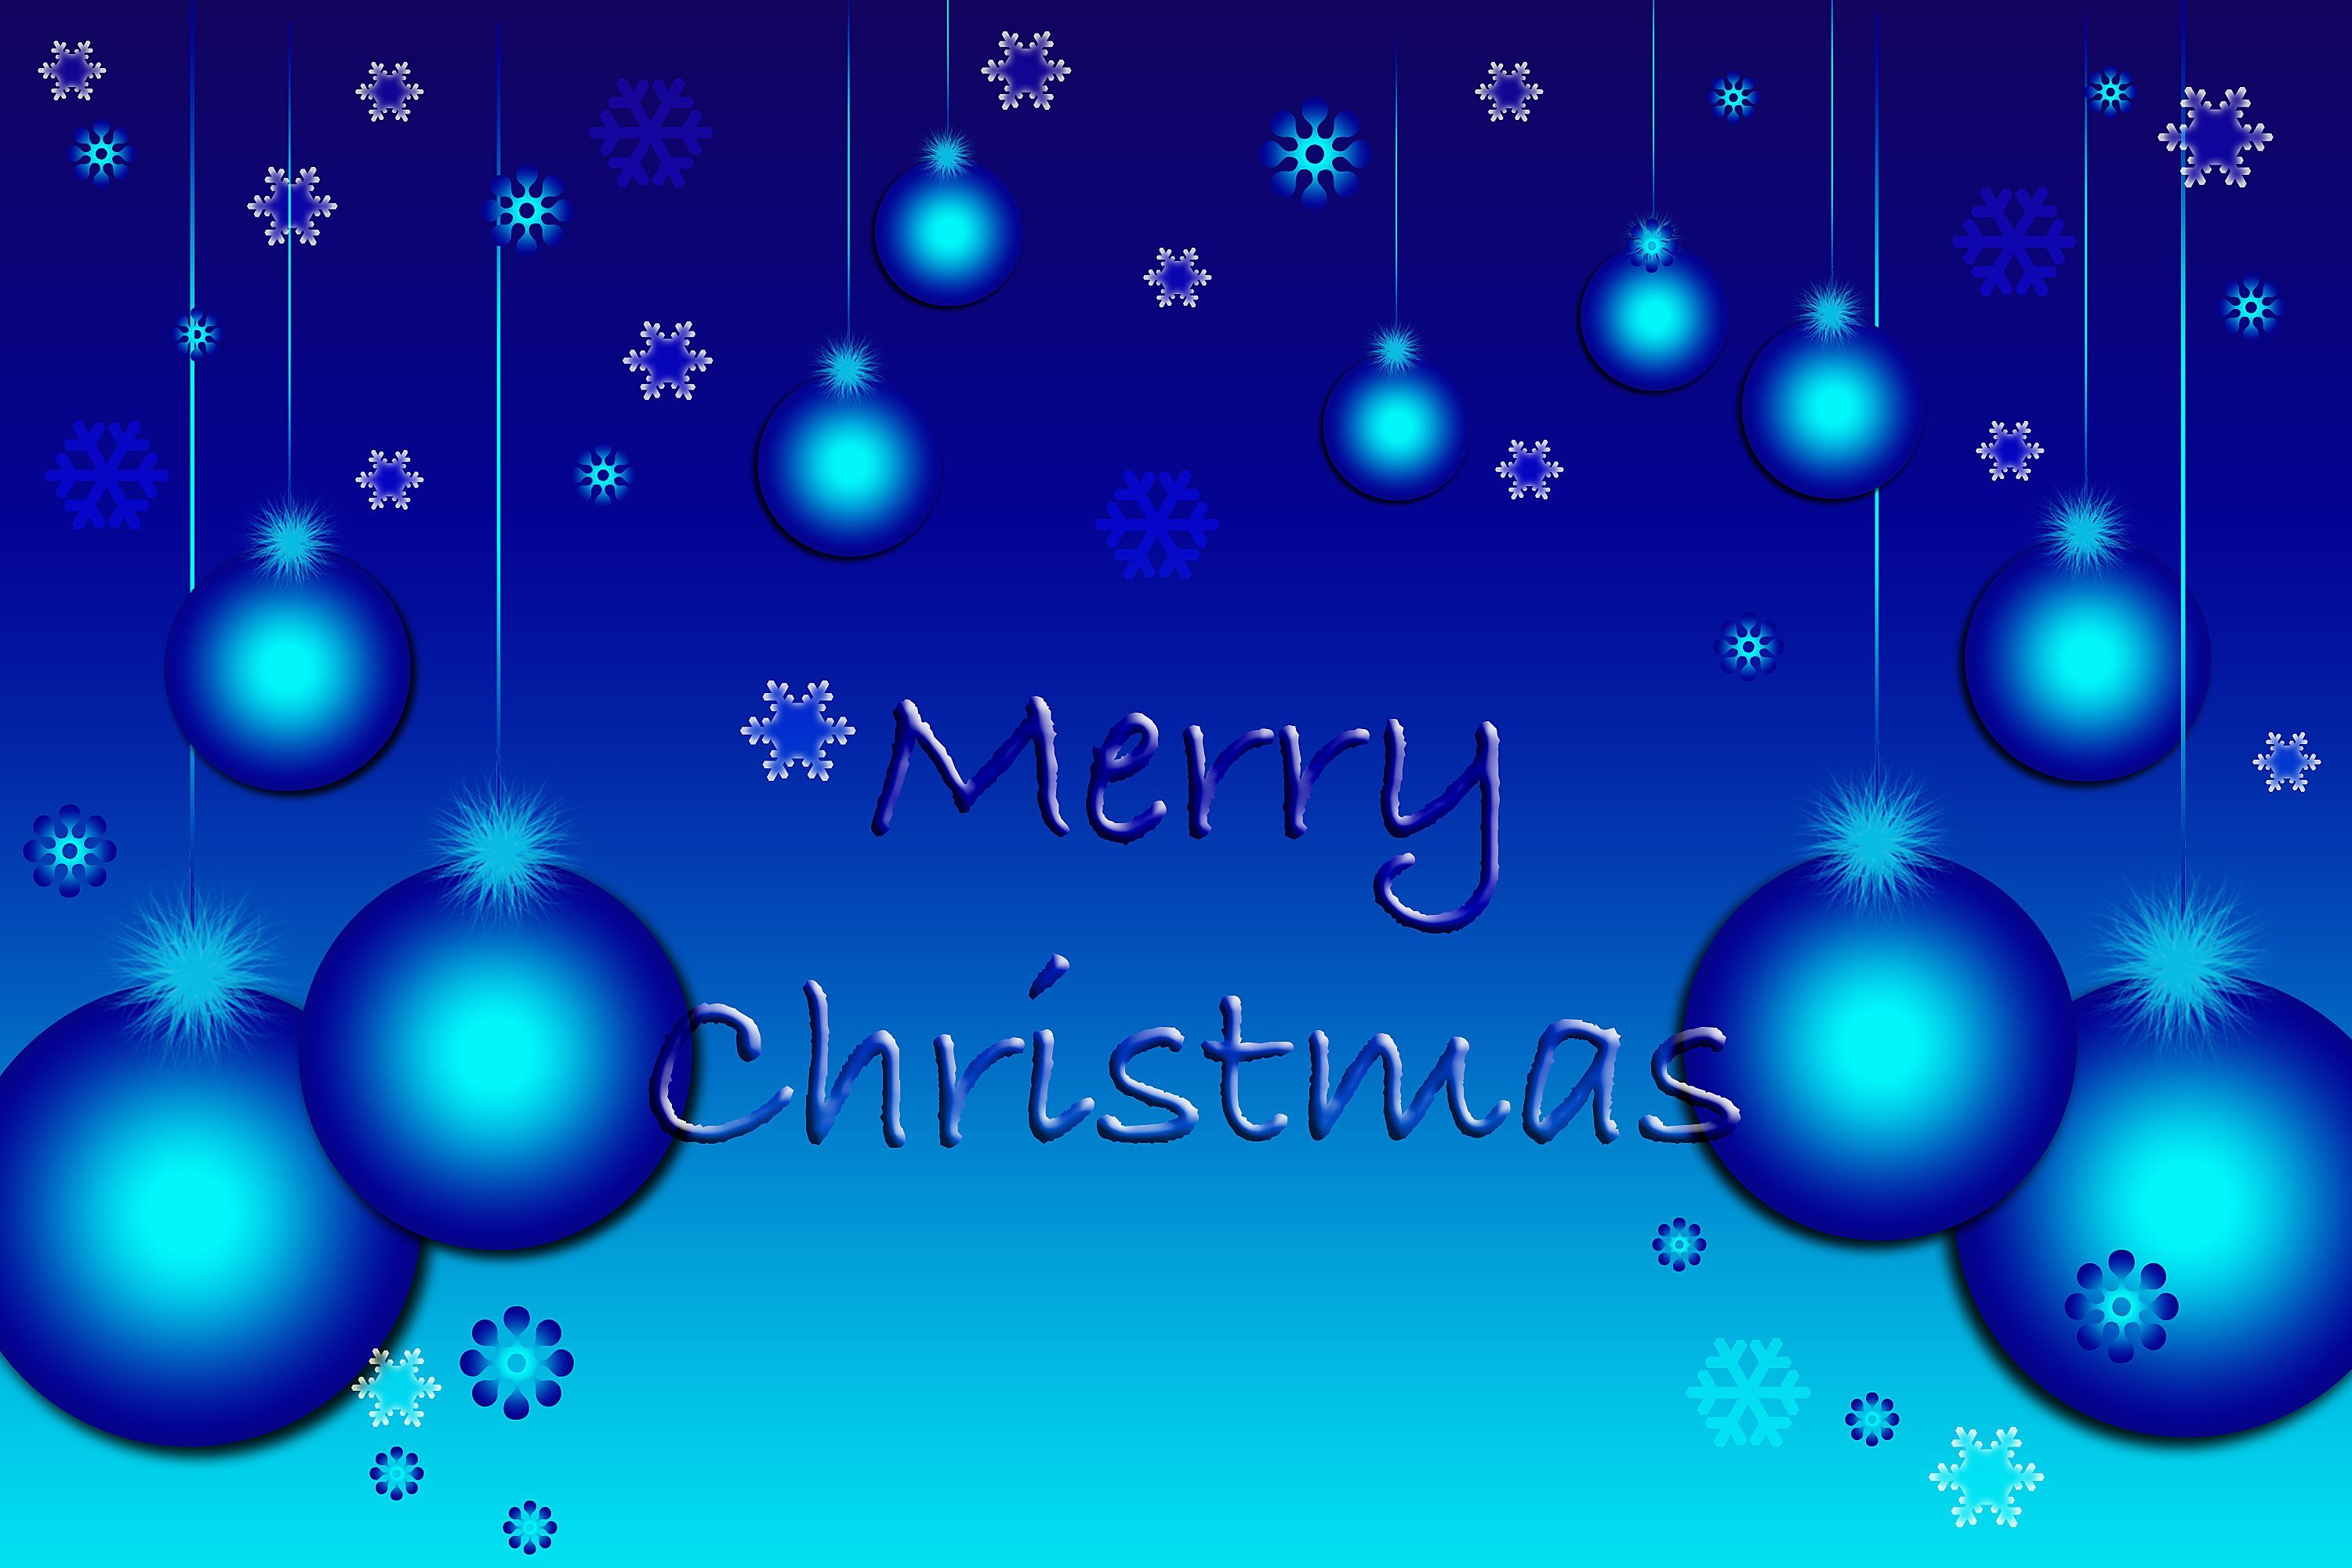 A MERRY BLUE CHRISTMAS. Merry christmas wallpaper, Merry christmas, Christmas colors